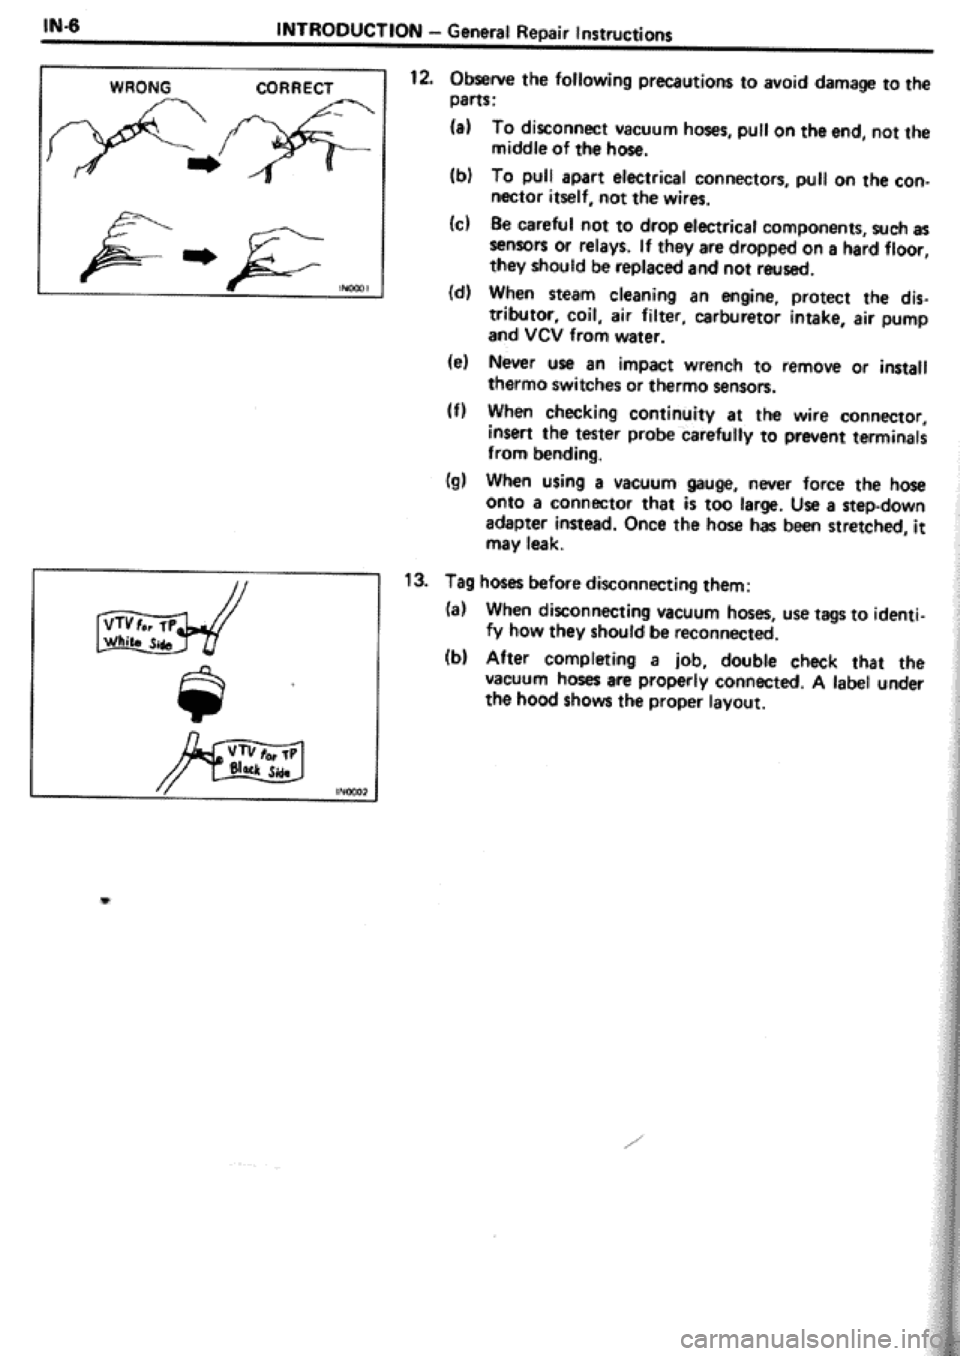 TOYOTA CELICA 1986  Service Repair Manual 